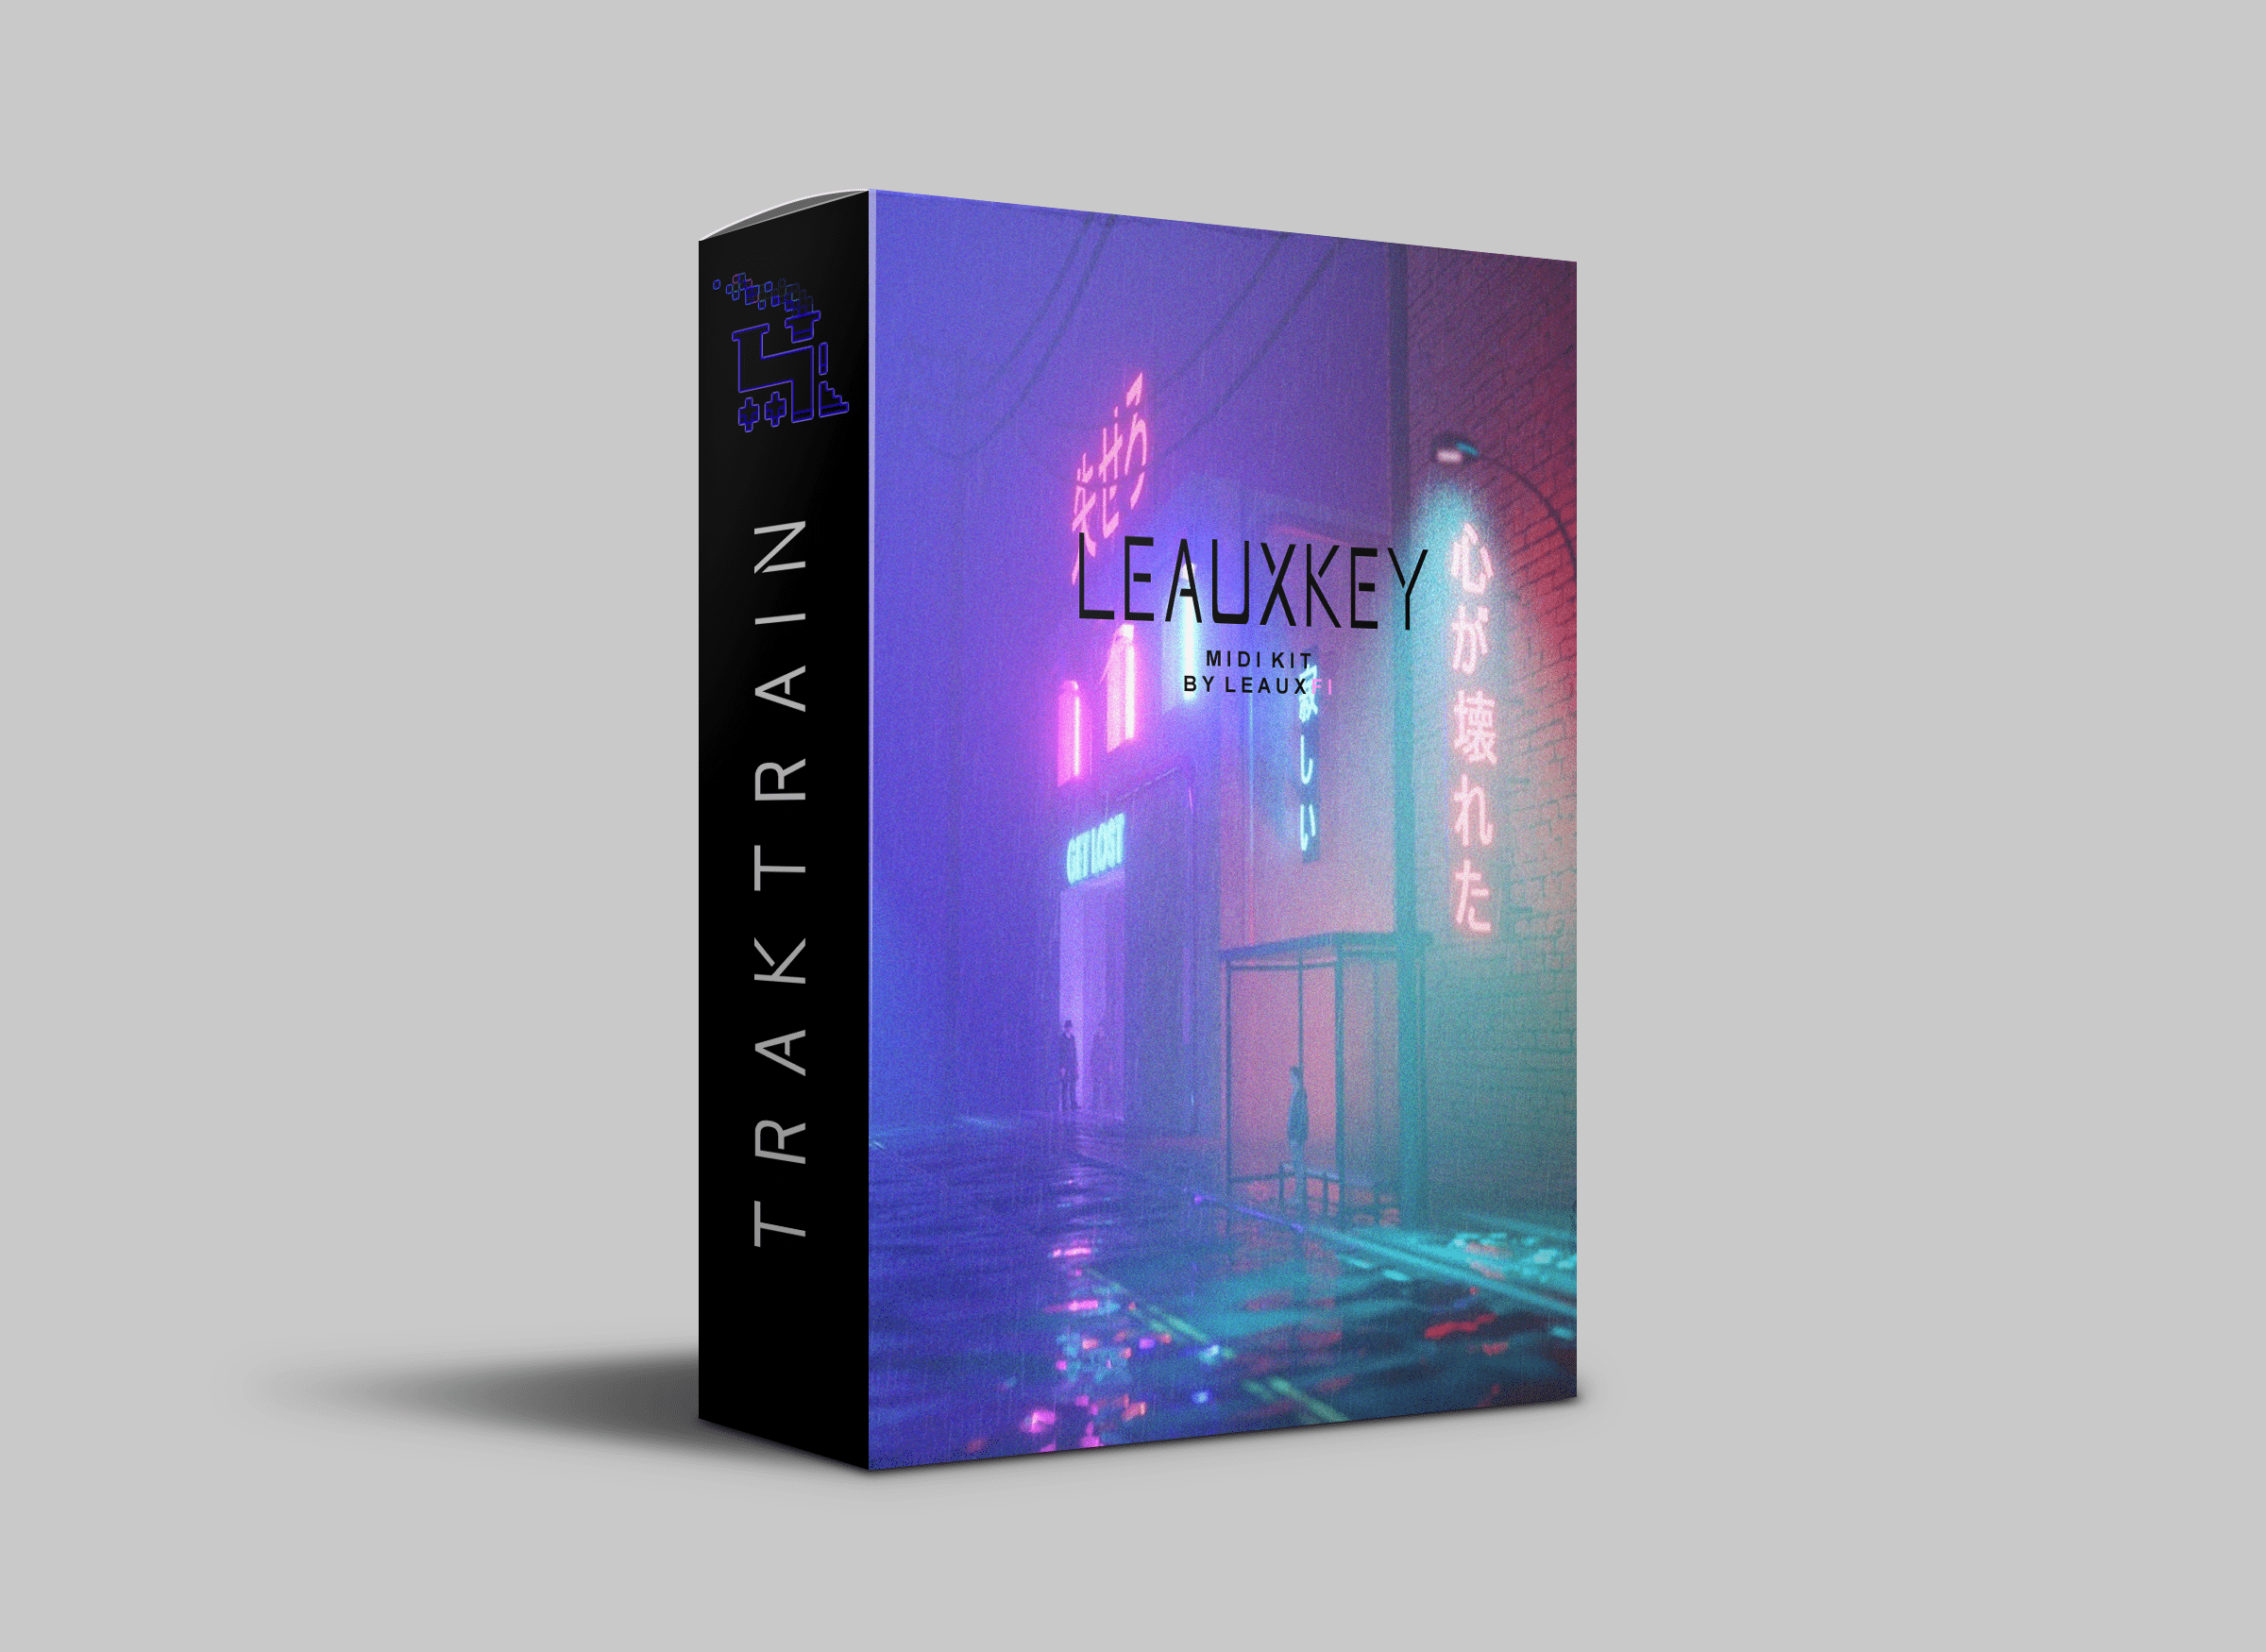 LeauxFi LeauxKey MIDI Kit Buy Now TRAKTRAIN Store